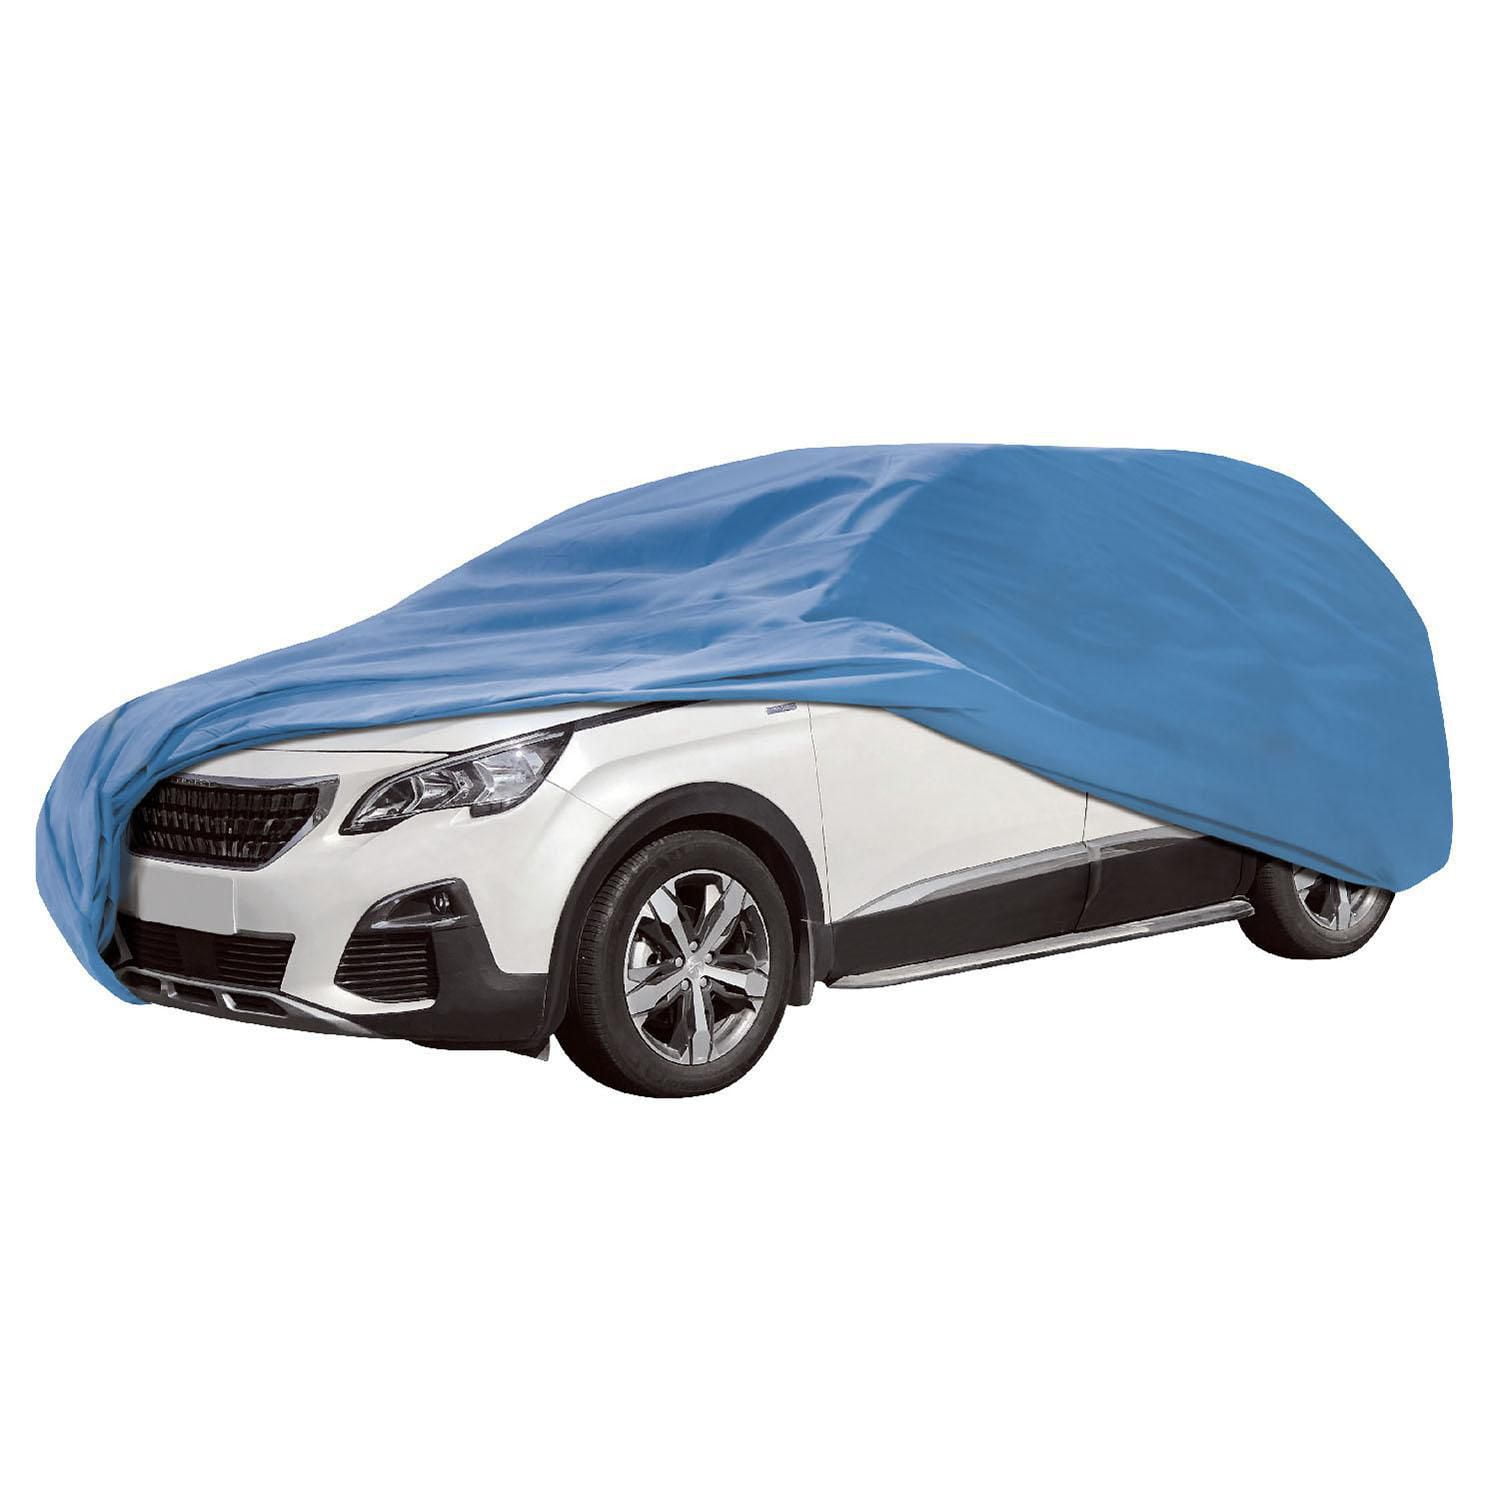 AutoCraft Car Cover, Blue 3 Layers, Fits Sedans 16' 9-19', Medium